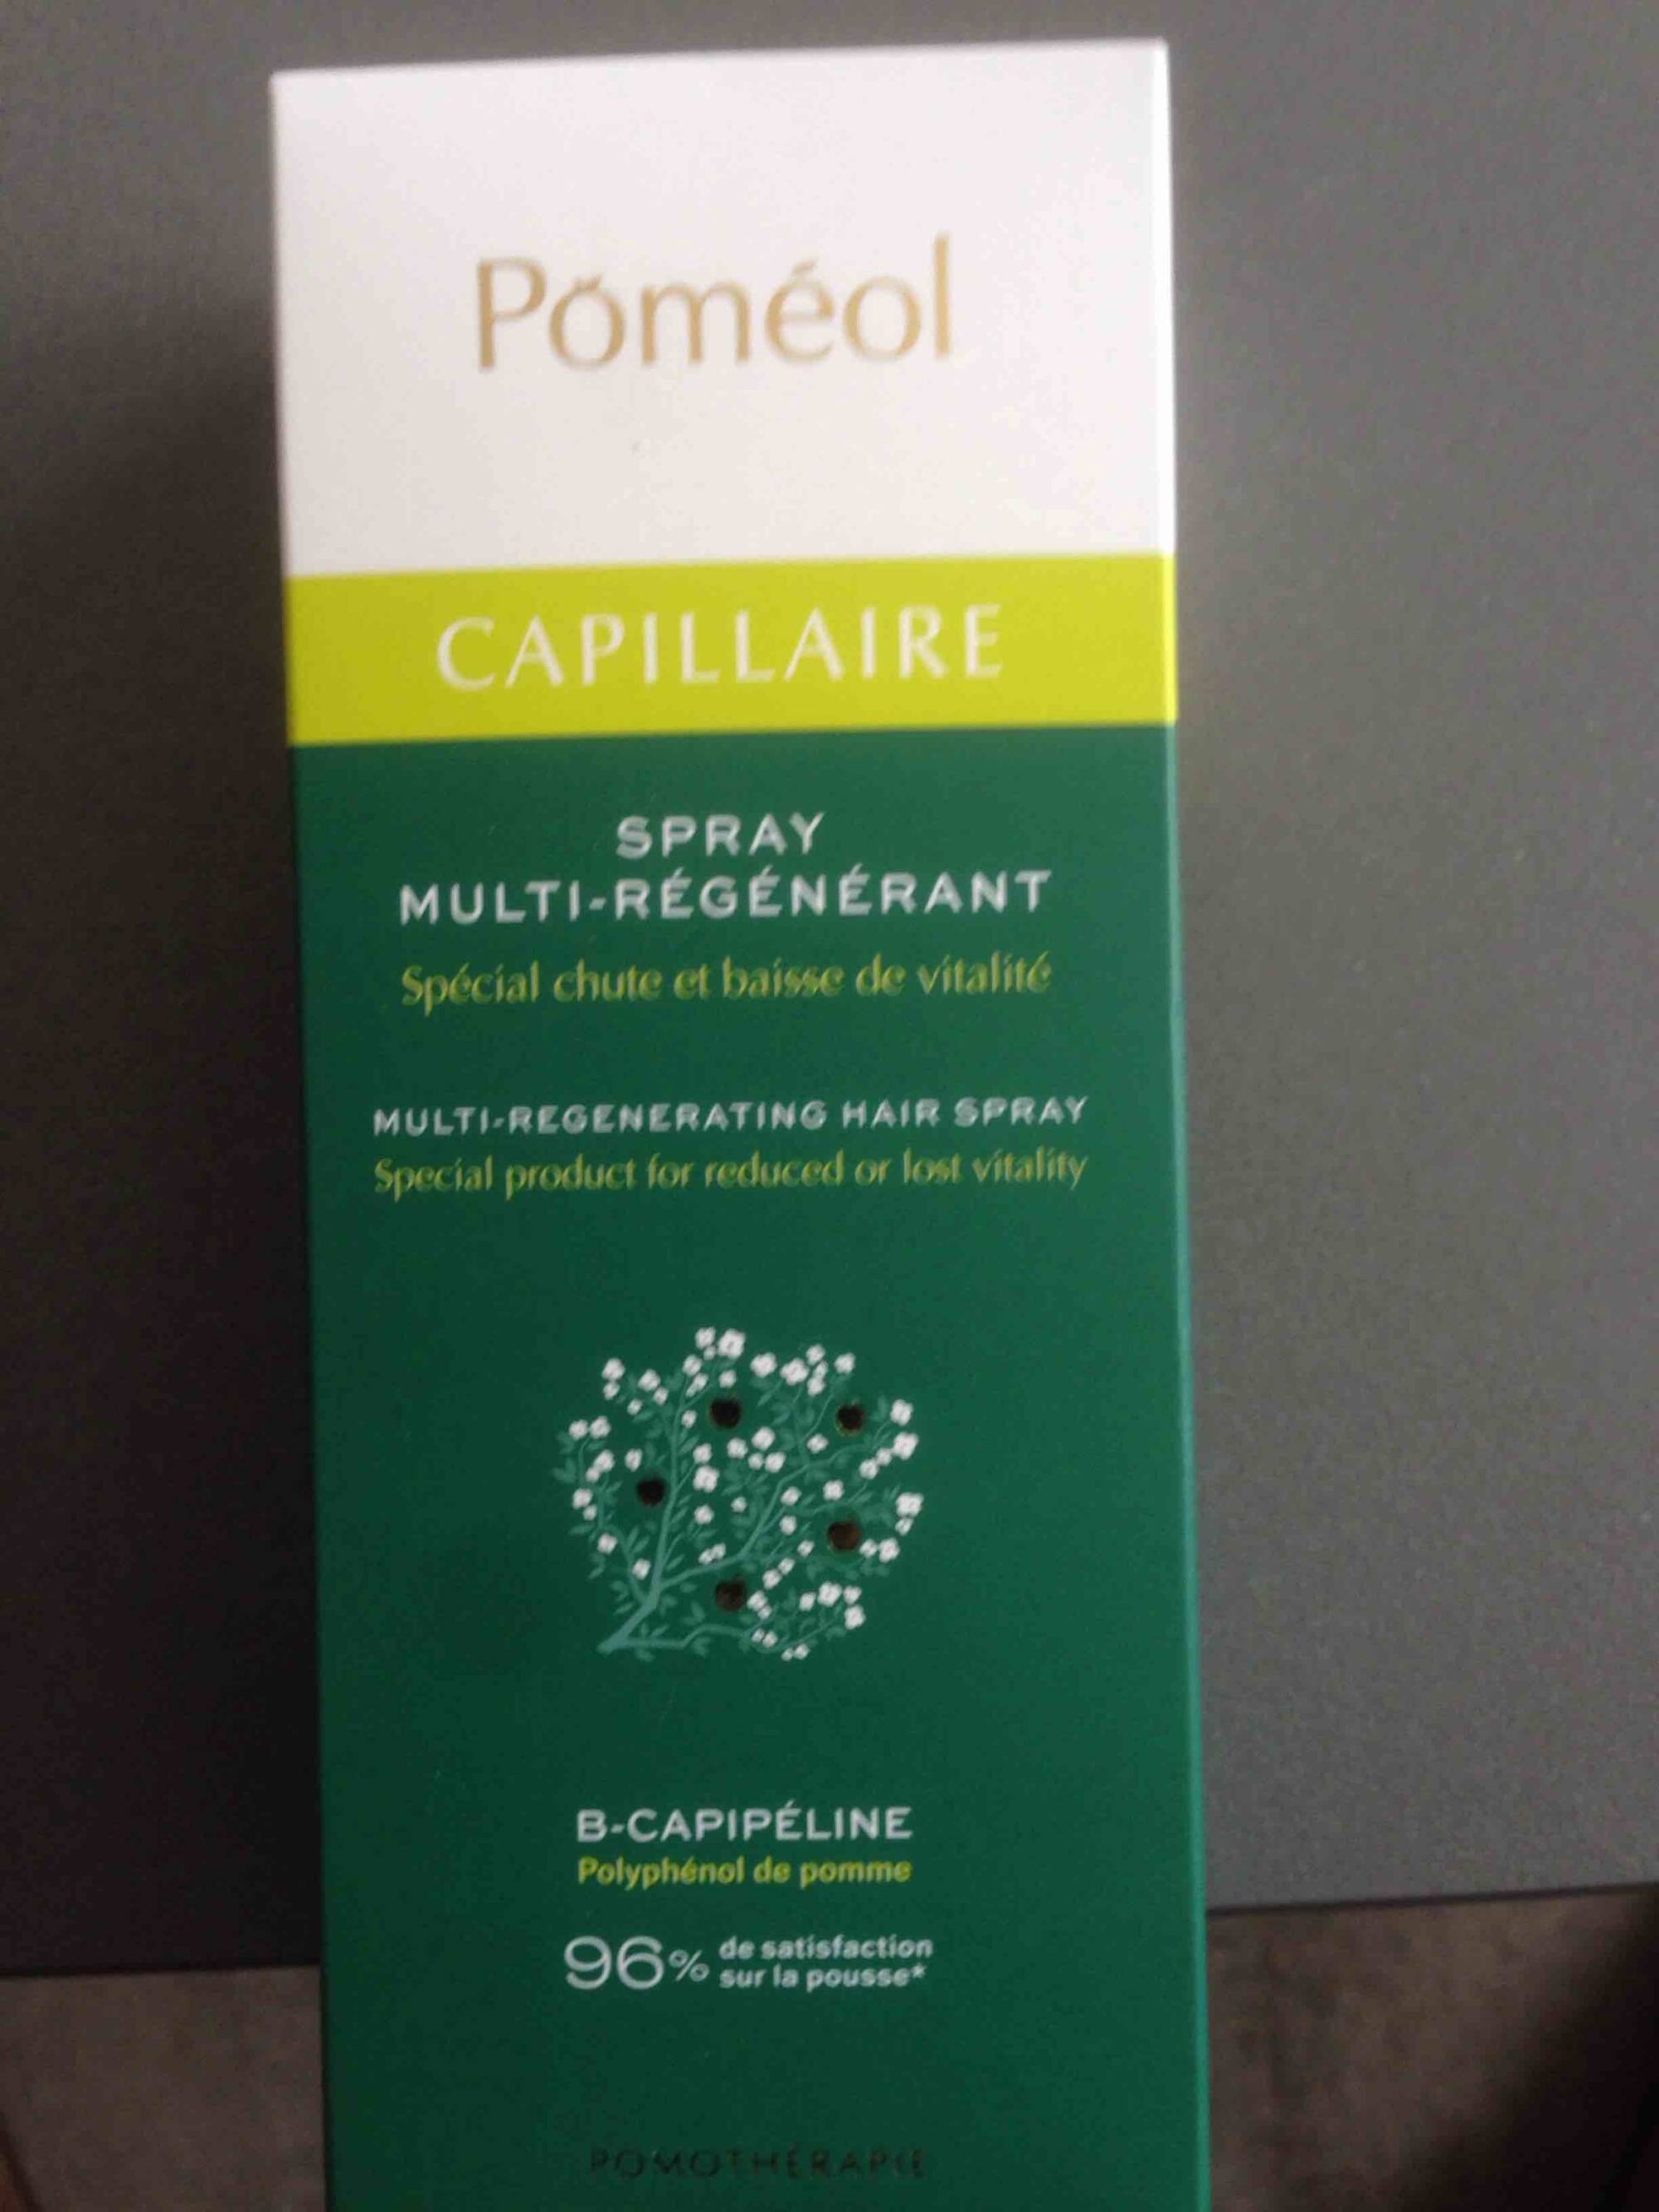 CLEMASCIENCE - Poméol Capillaire - Spray multi-régénérant 